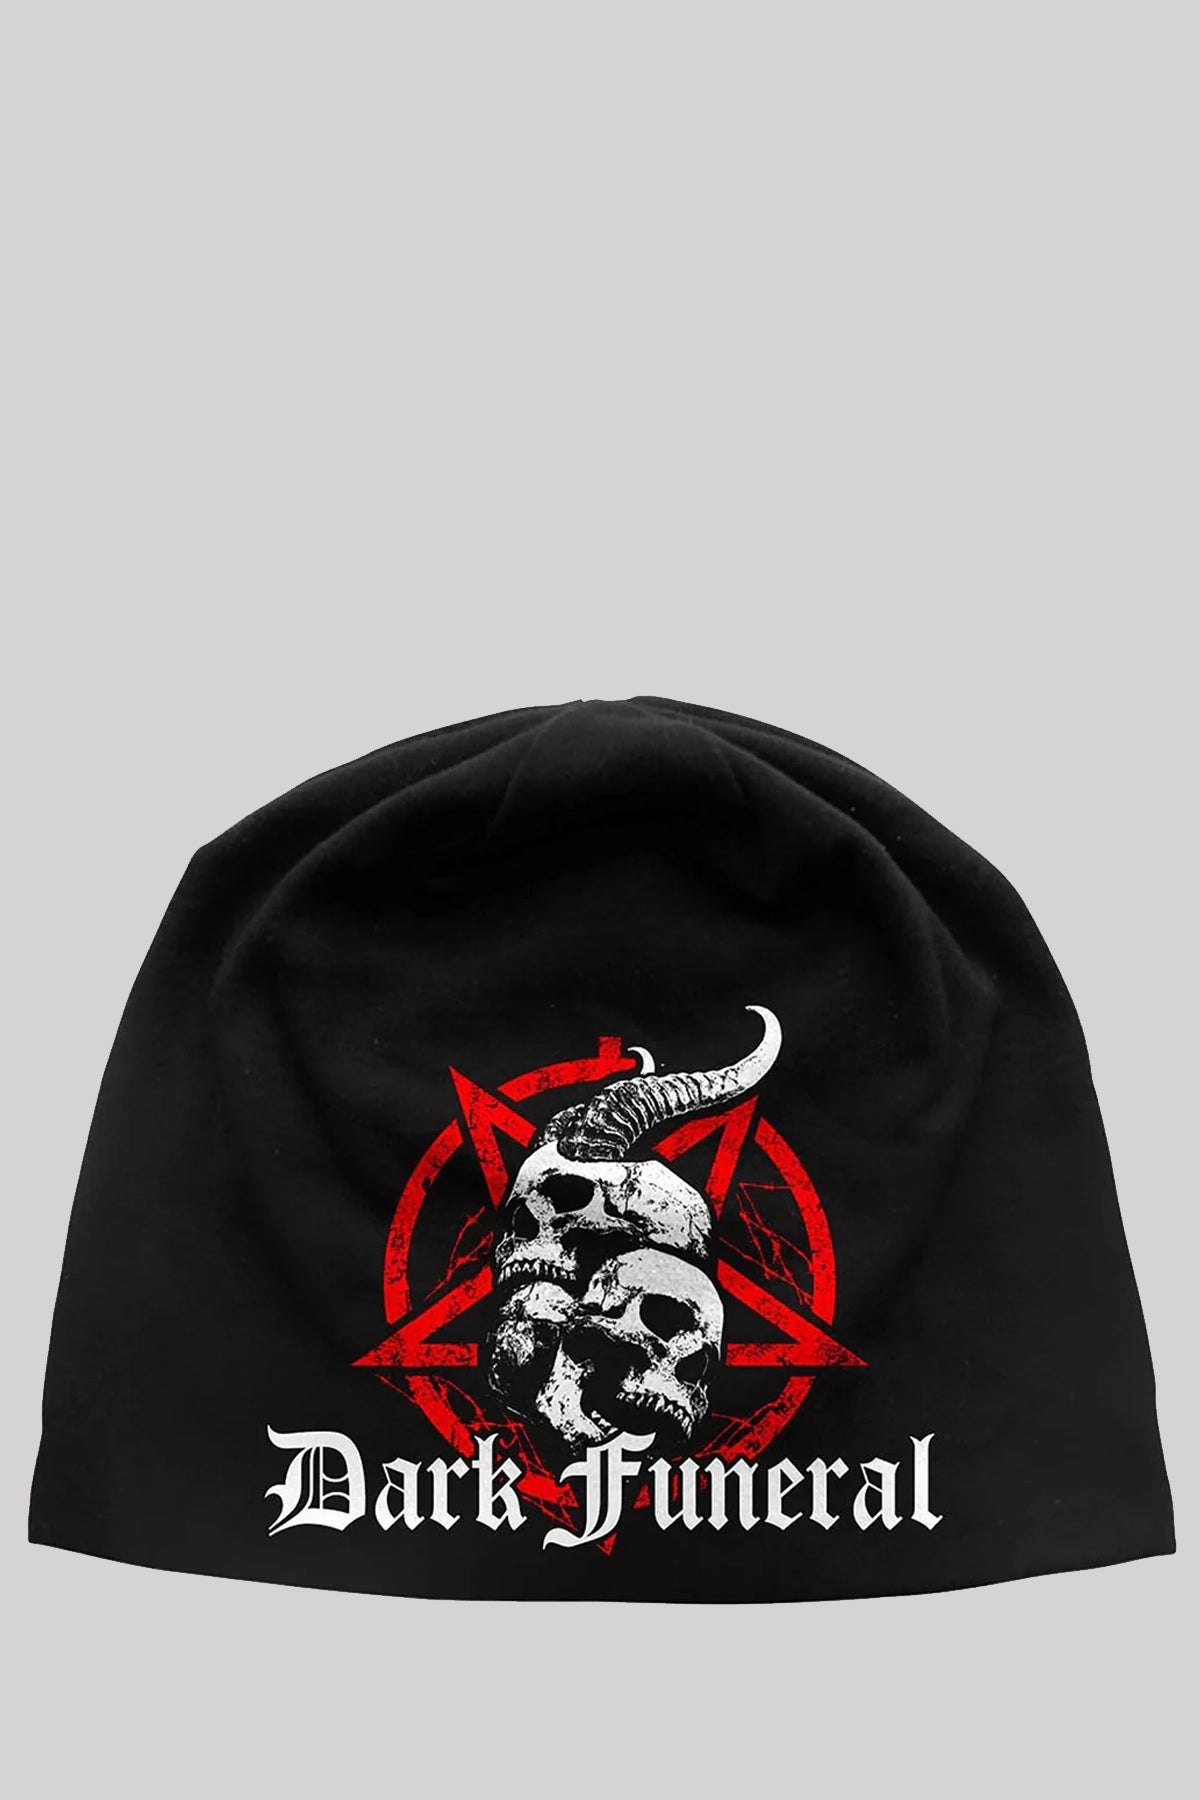 Dark Funeral Unisex Beanie Hat: Skulls & Pentagram Official Band Merch